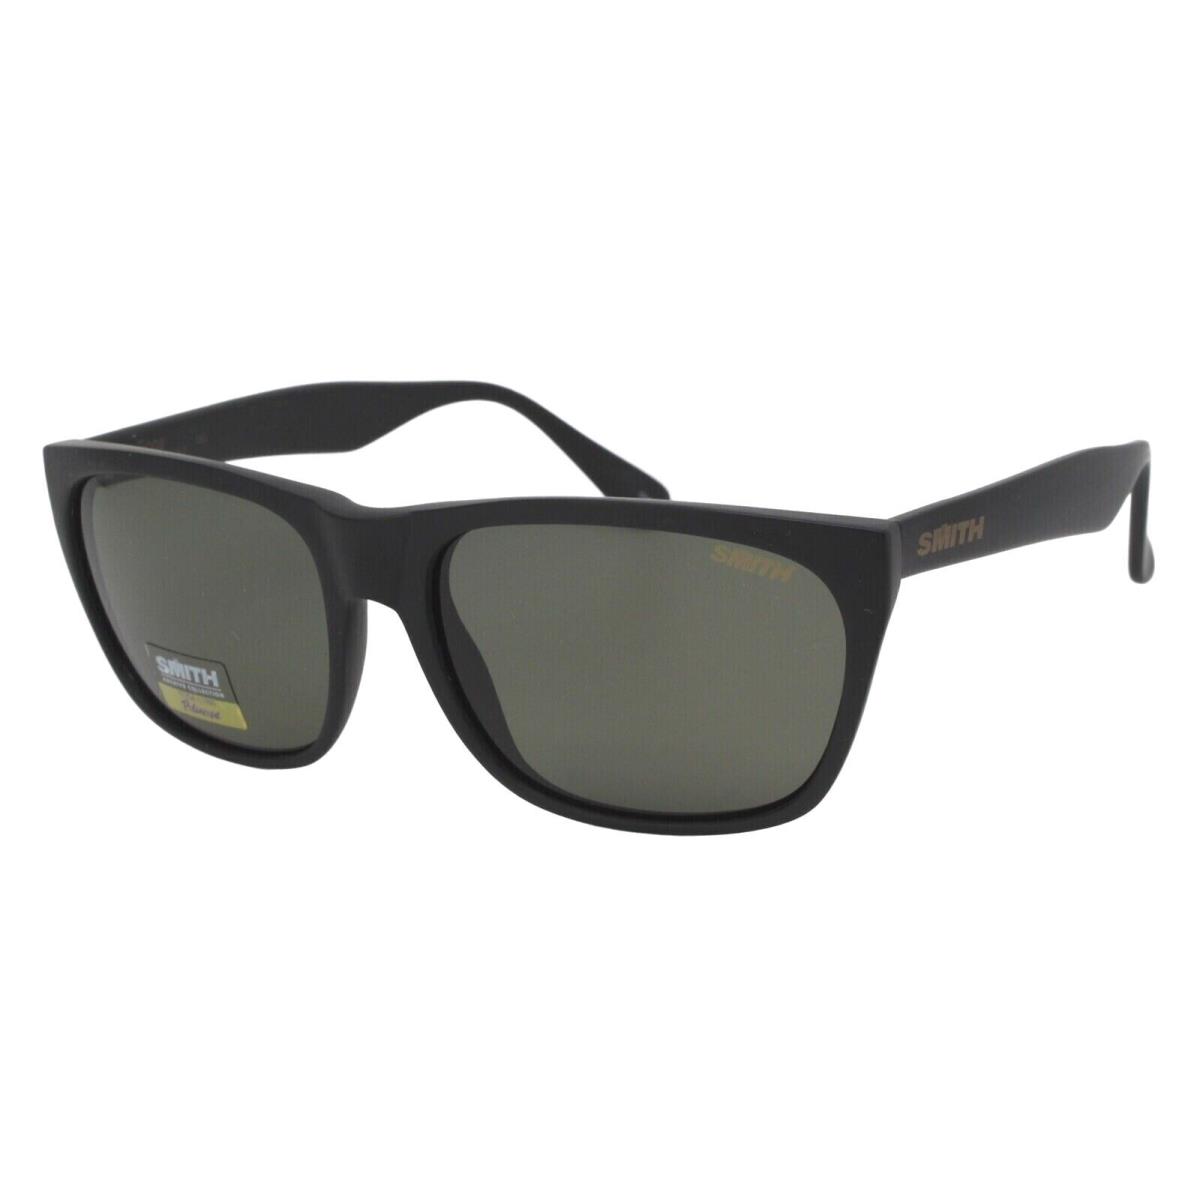 Smith Optics Tioga Matte Black Gray Green Polarized Men s Sunglasses 58-17-150